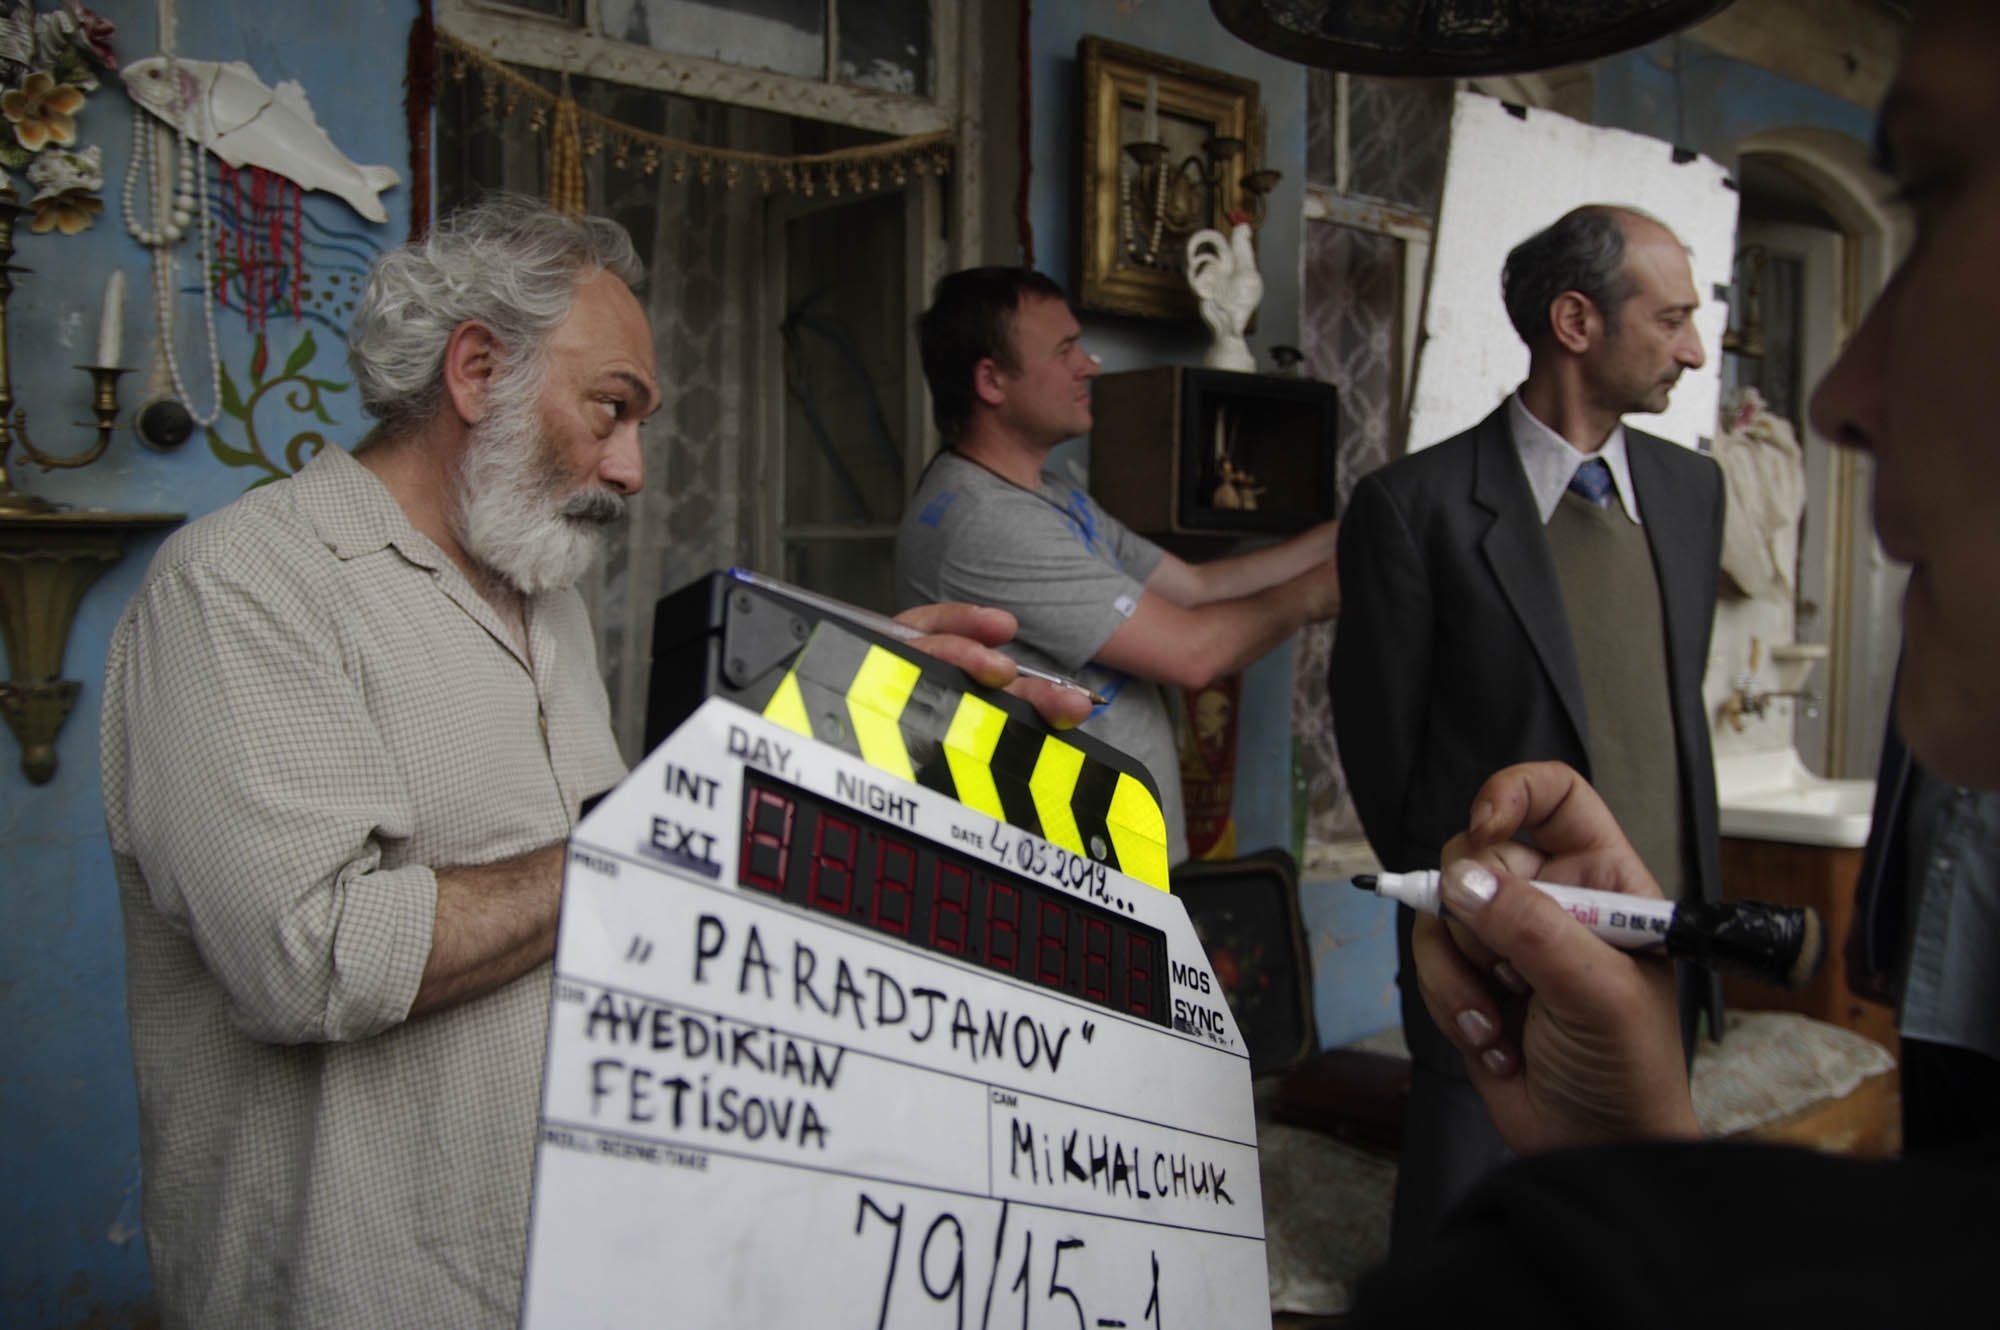 Ukraine nominates "Parajanov" for Academy Awards